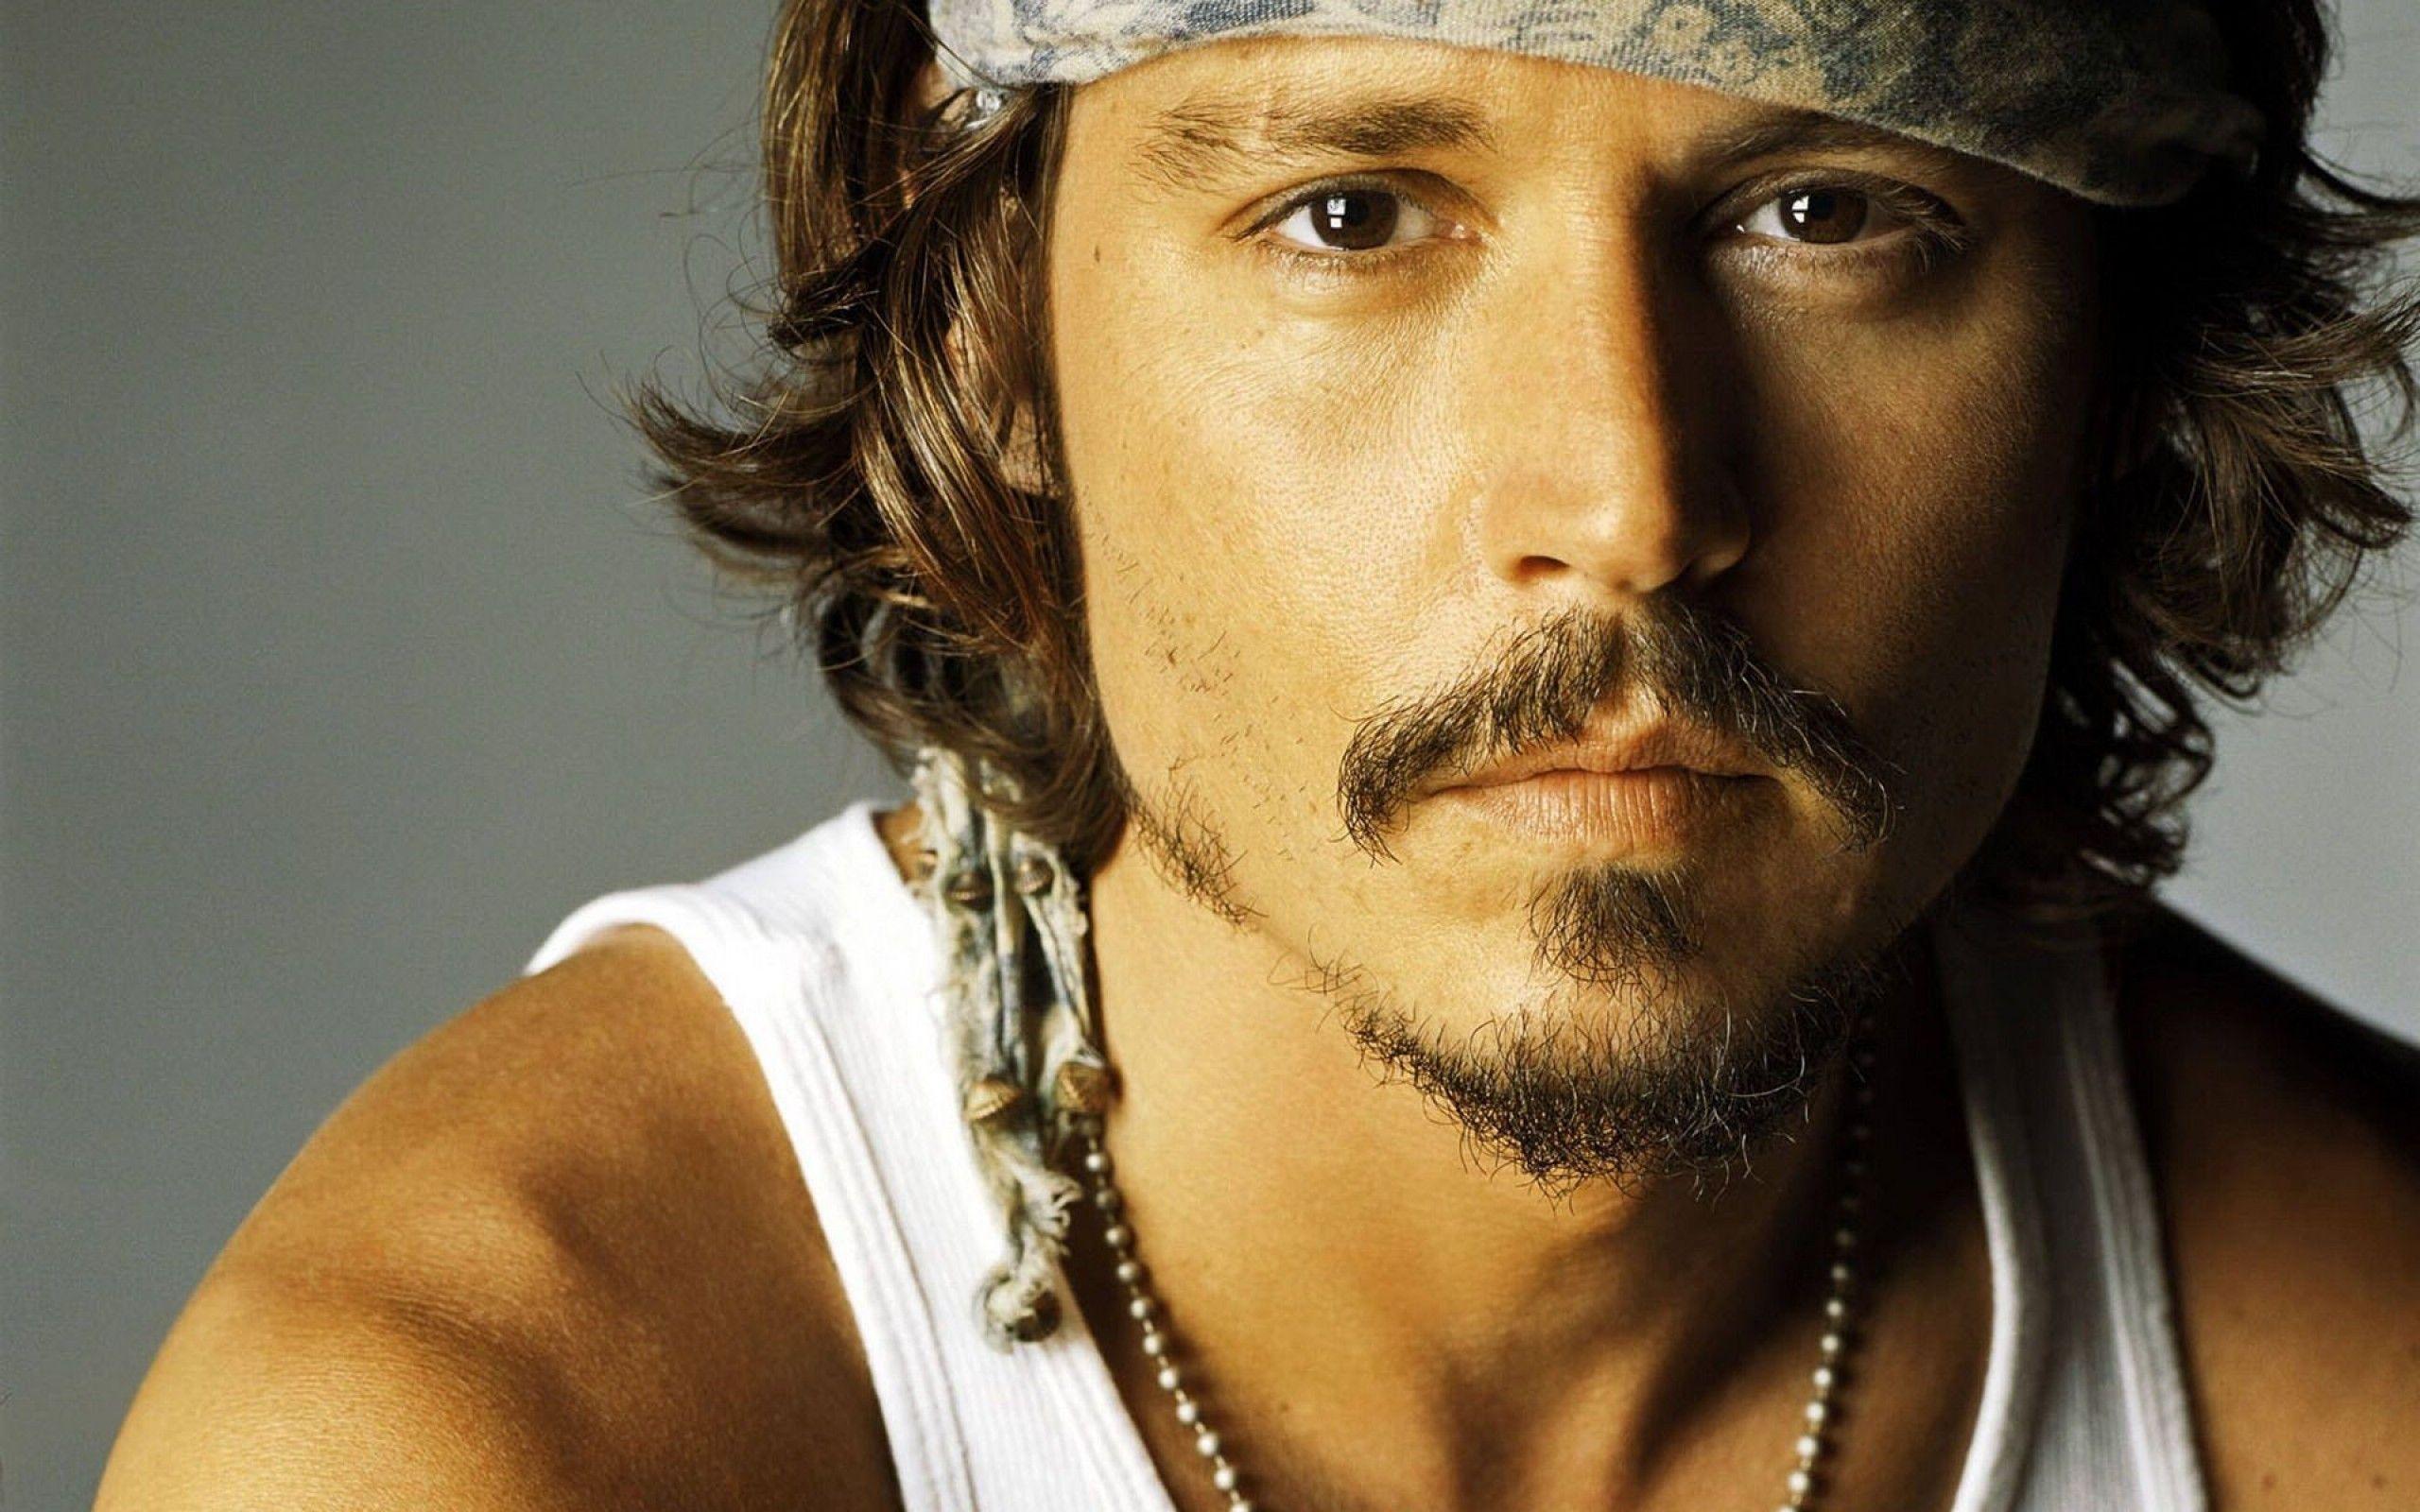 Johnny Depp HD Wallpaper. Johnny Depp Image Free Download